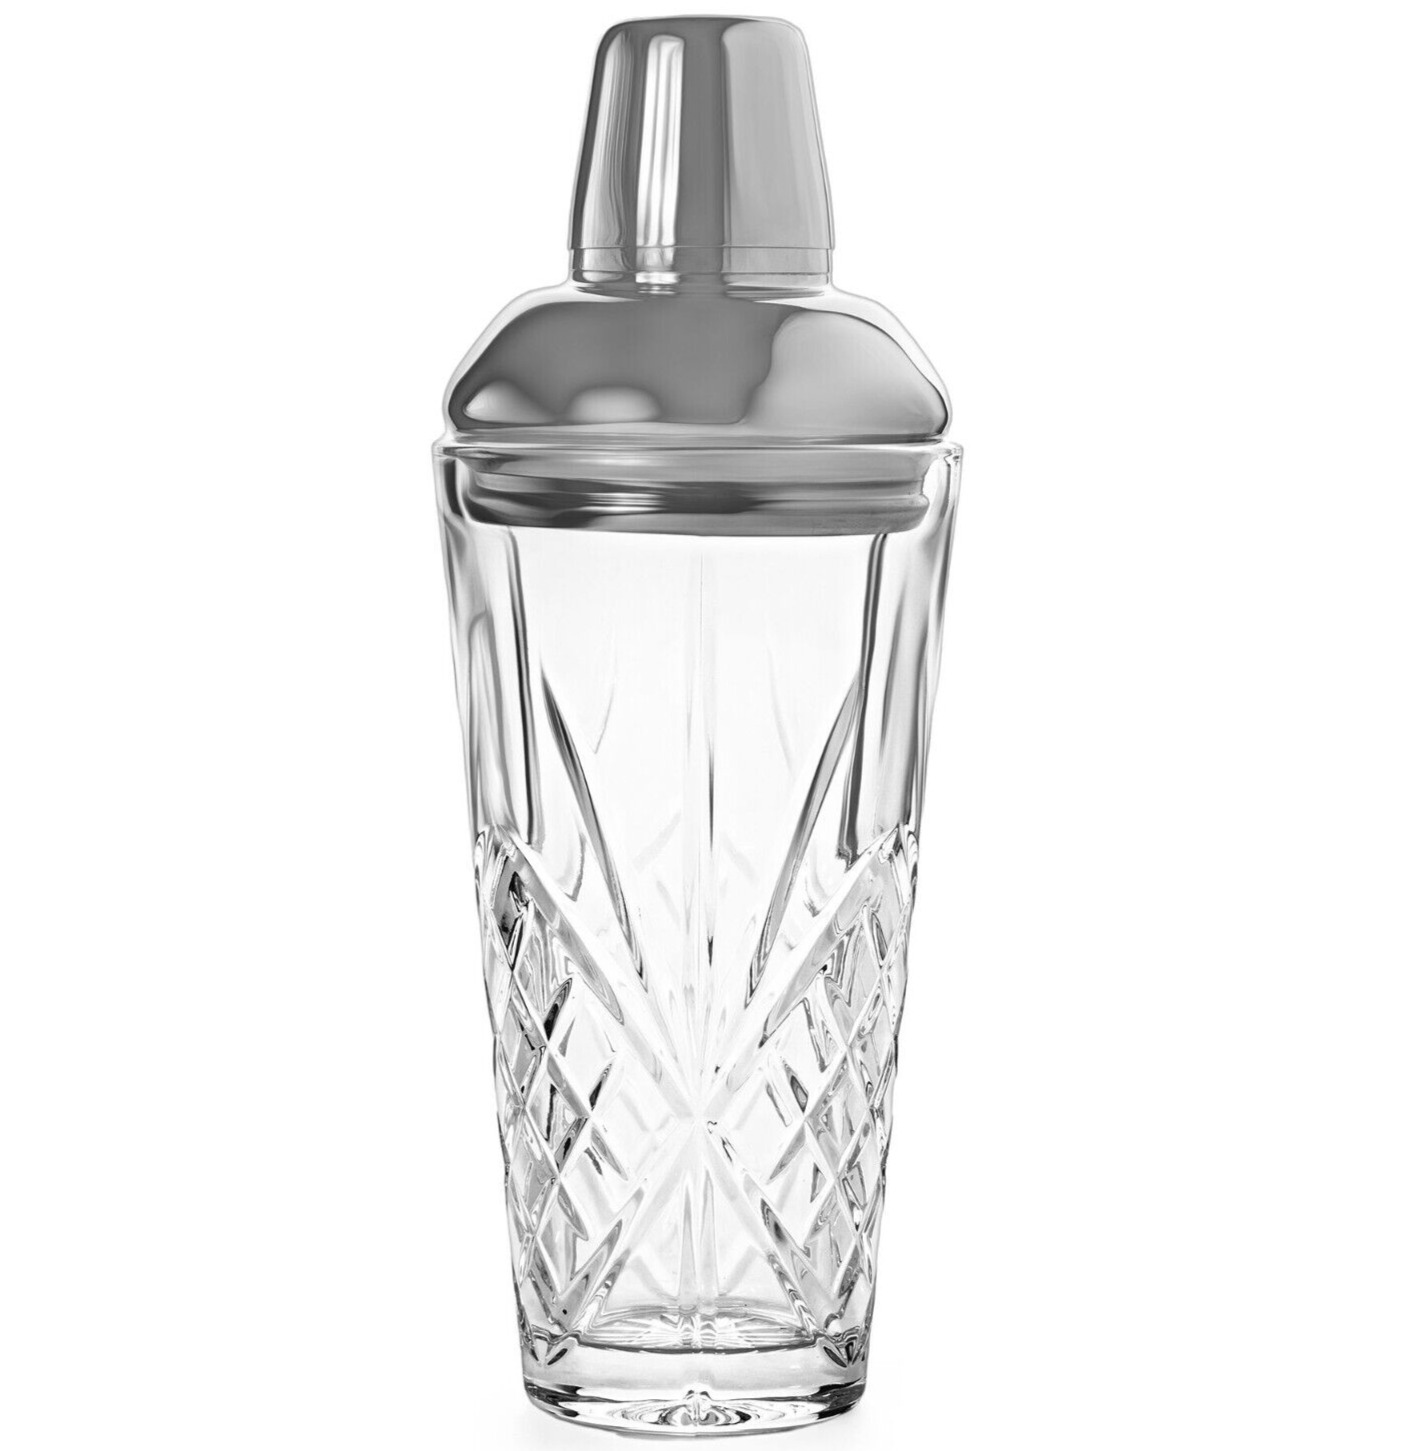 15 oz Crystal Glassware Tumbler Bartender Shaker Glass Martini Cocktails